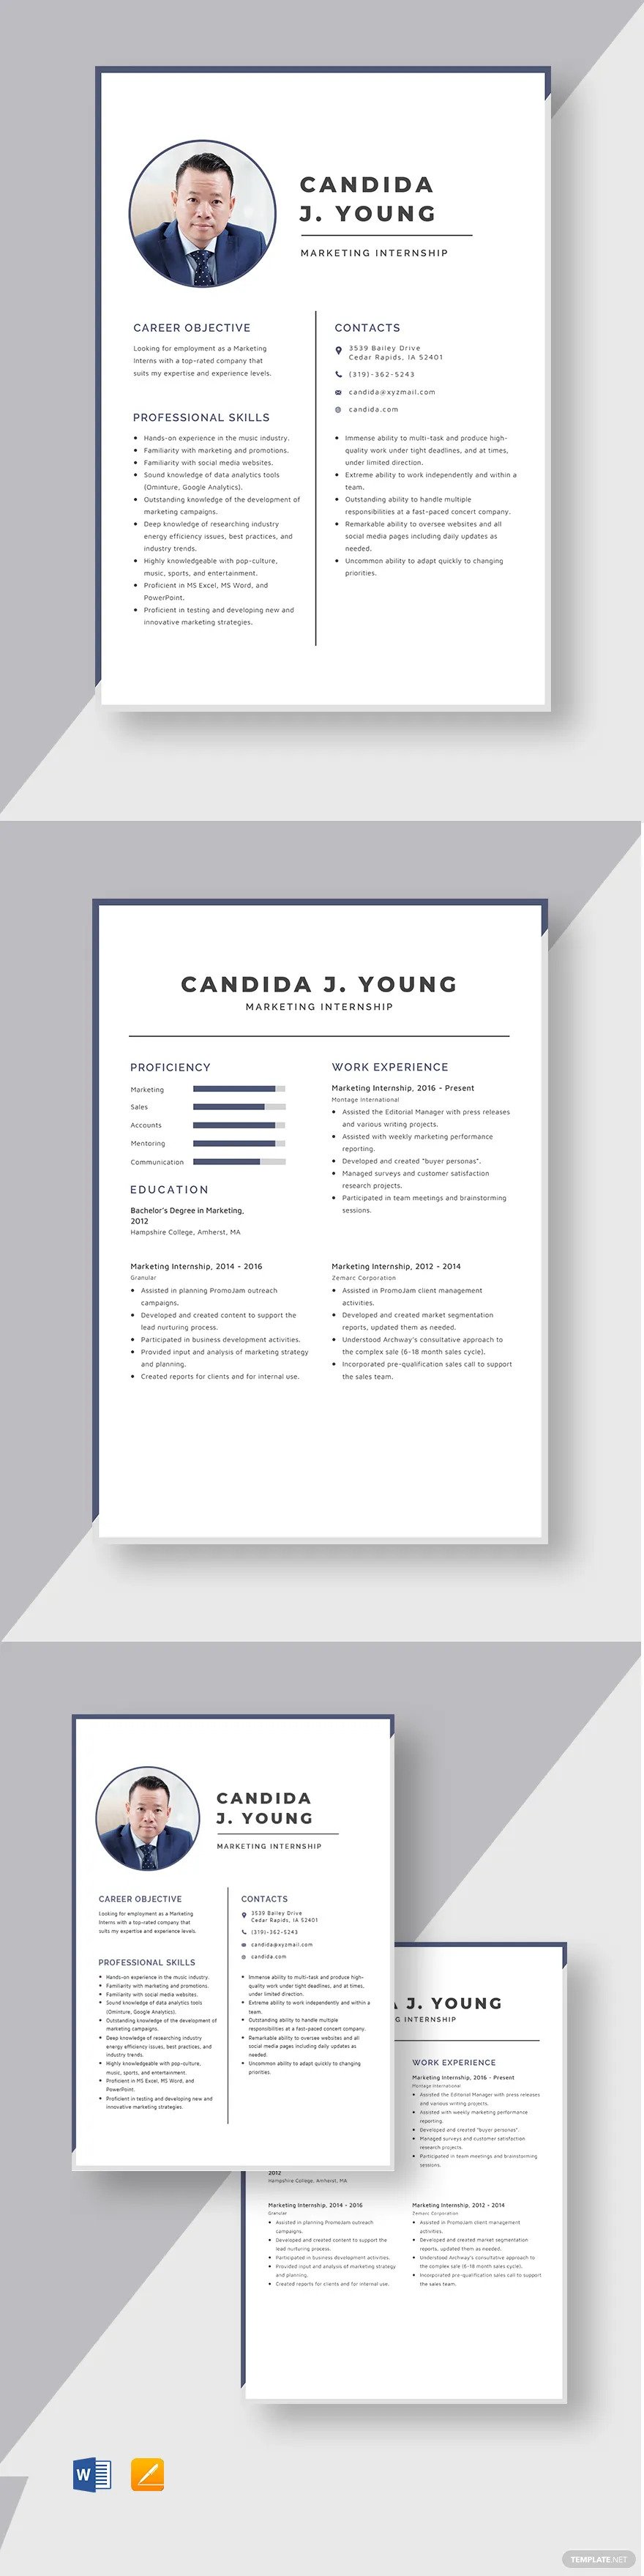 marketing internship resume template